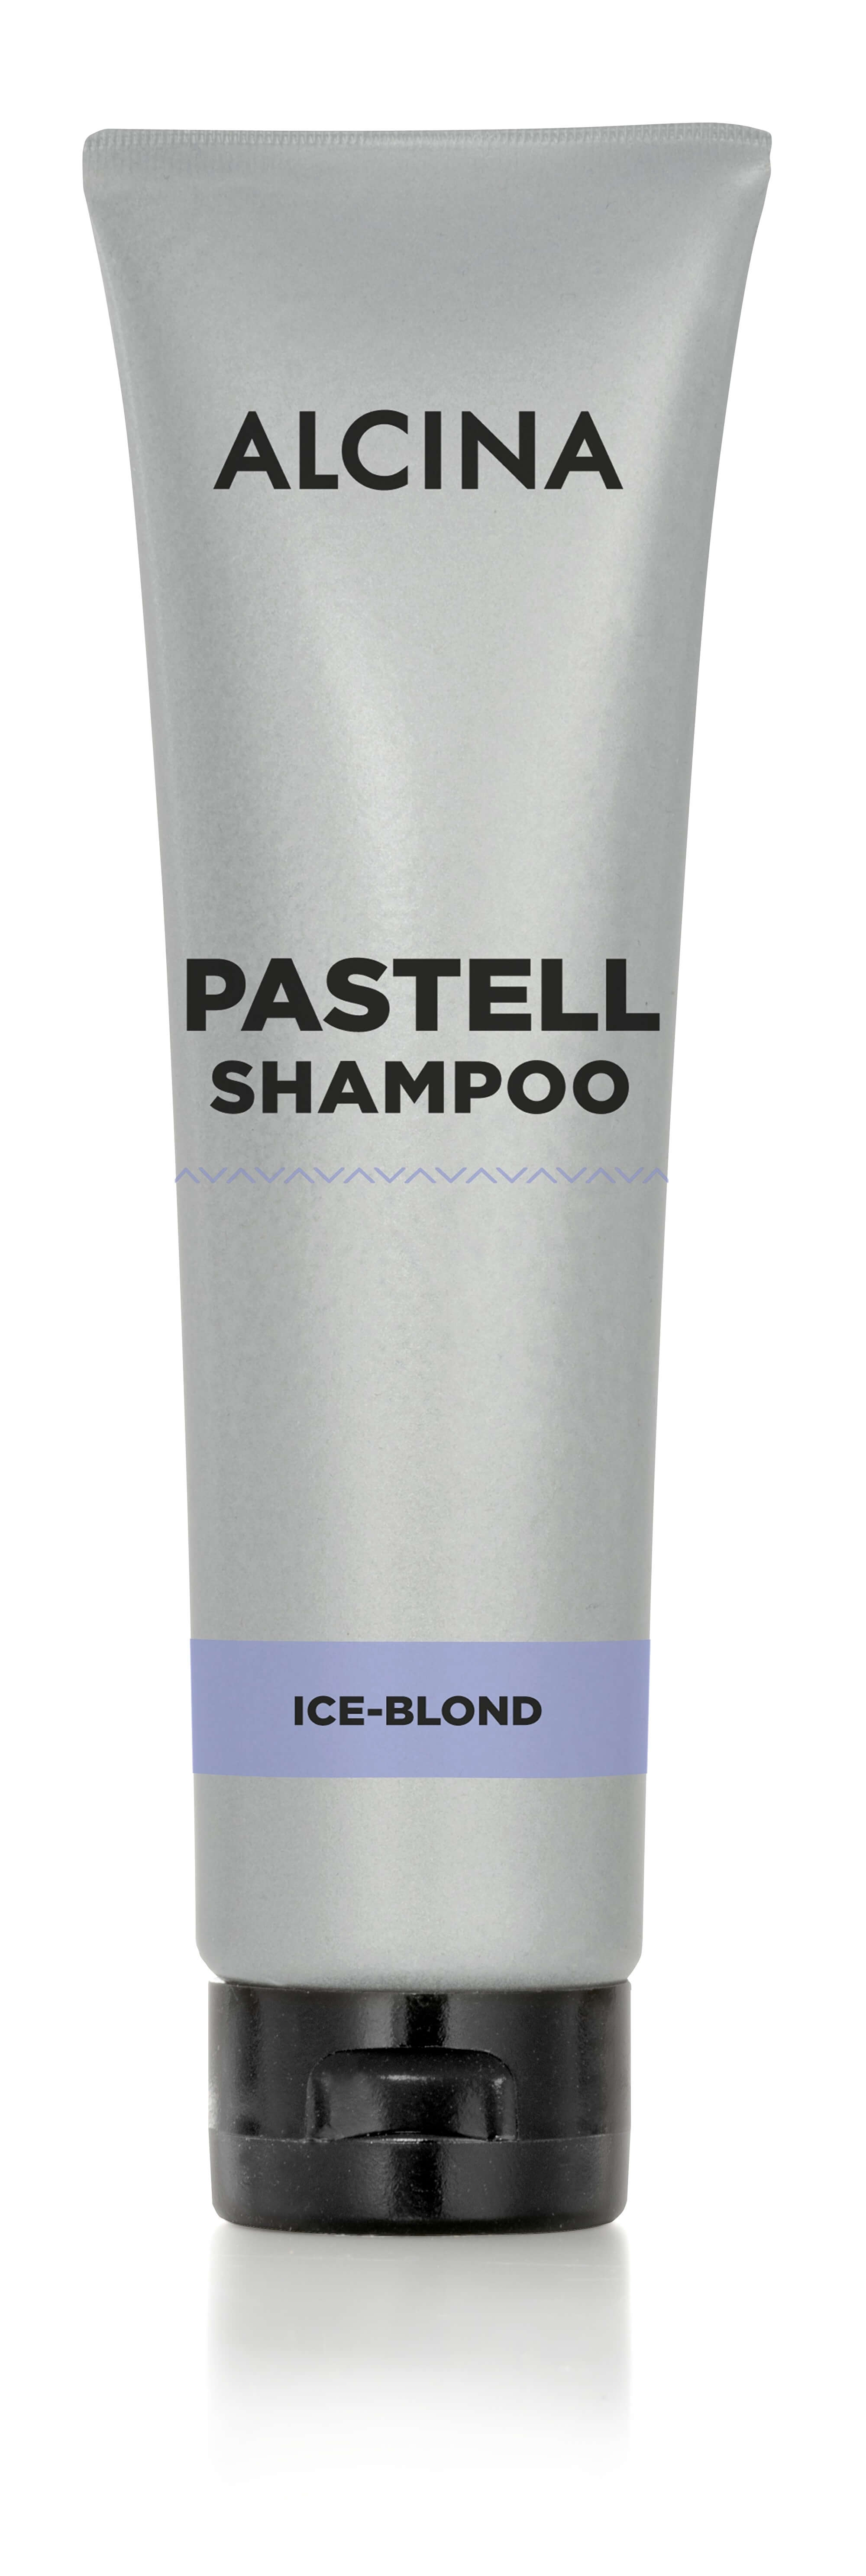 Alcina Šampon pro blond vlasy Ice Blond (Pastell Shampoo) 500 ml